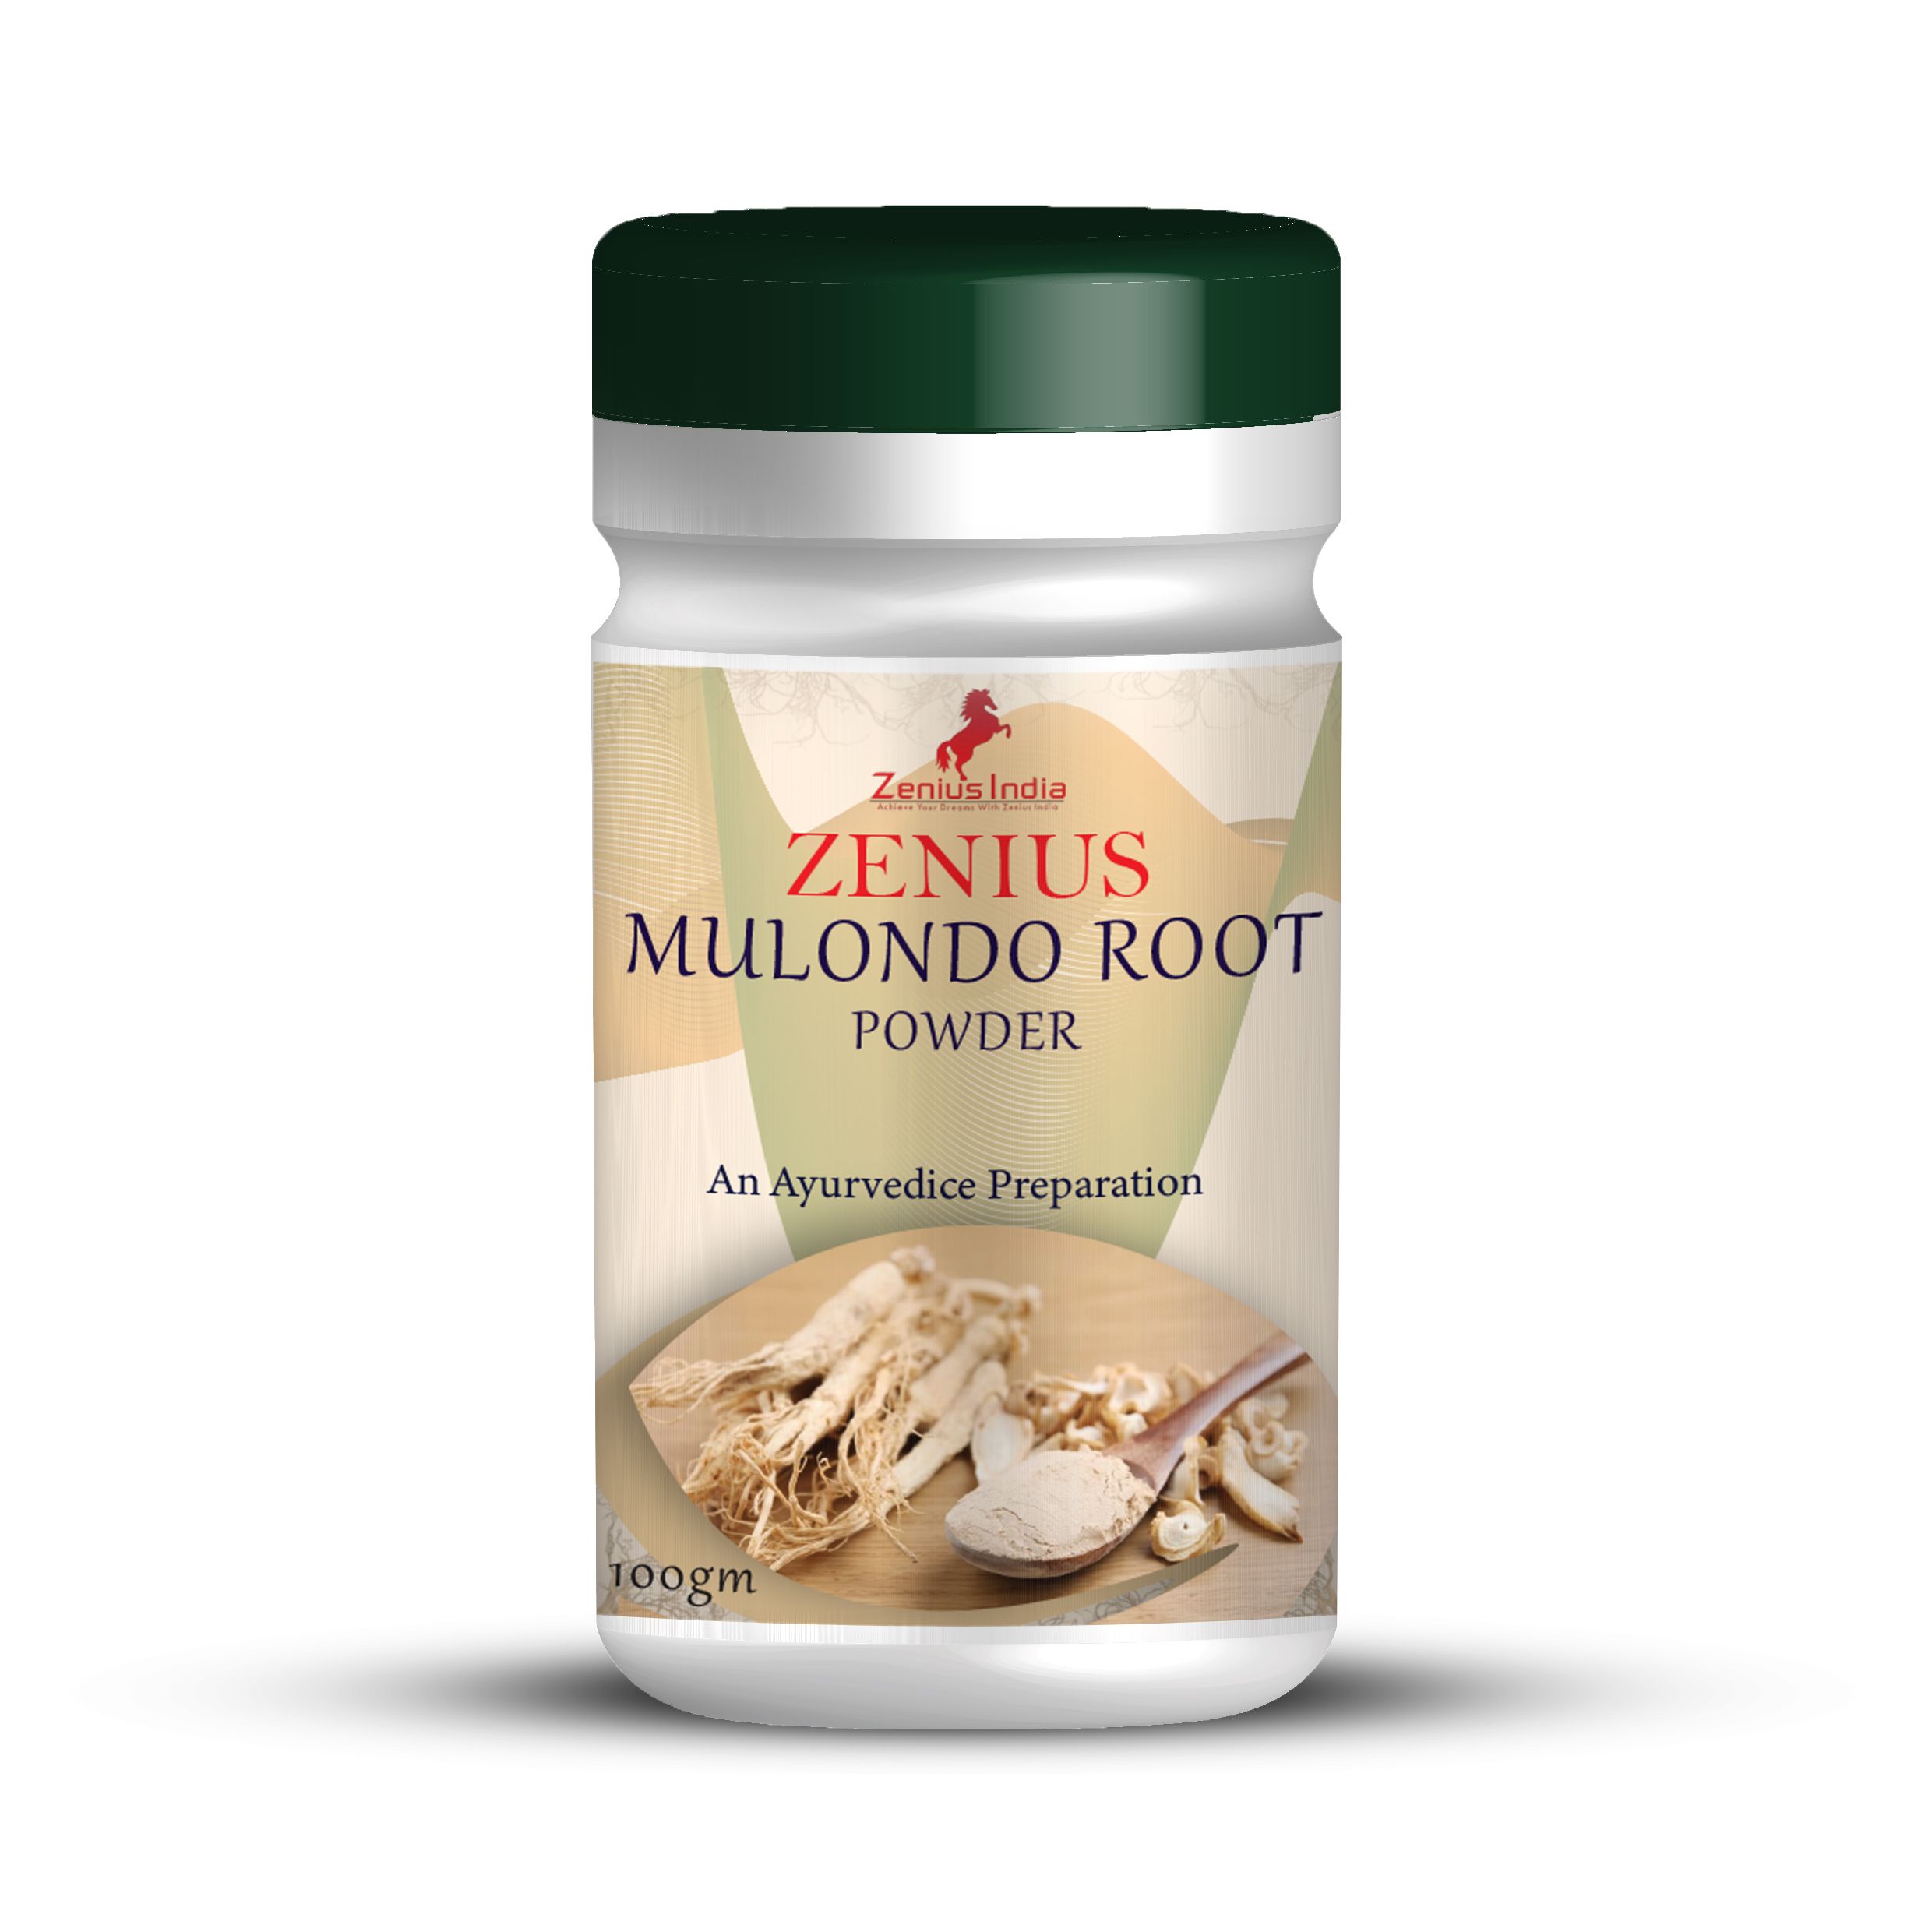 Zenius Mulondo Root Powder